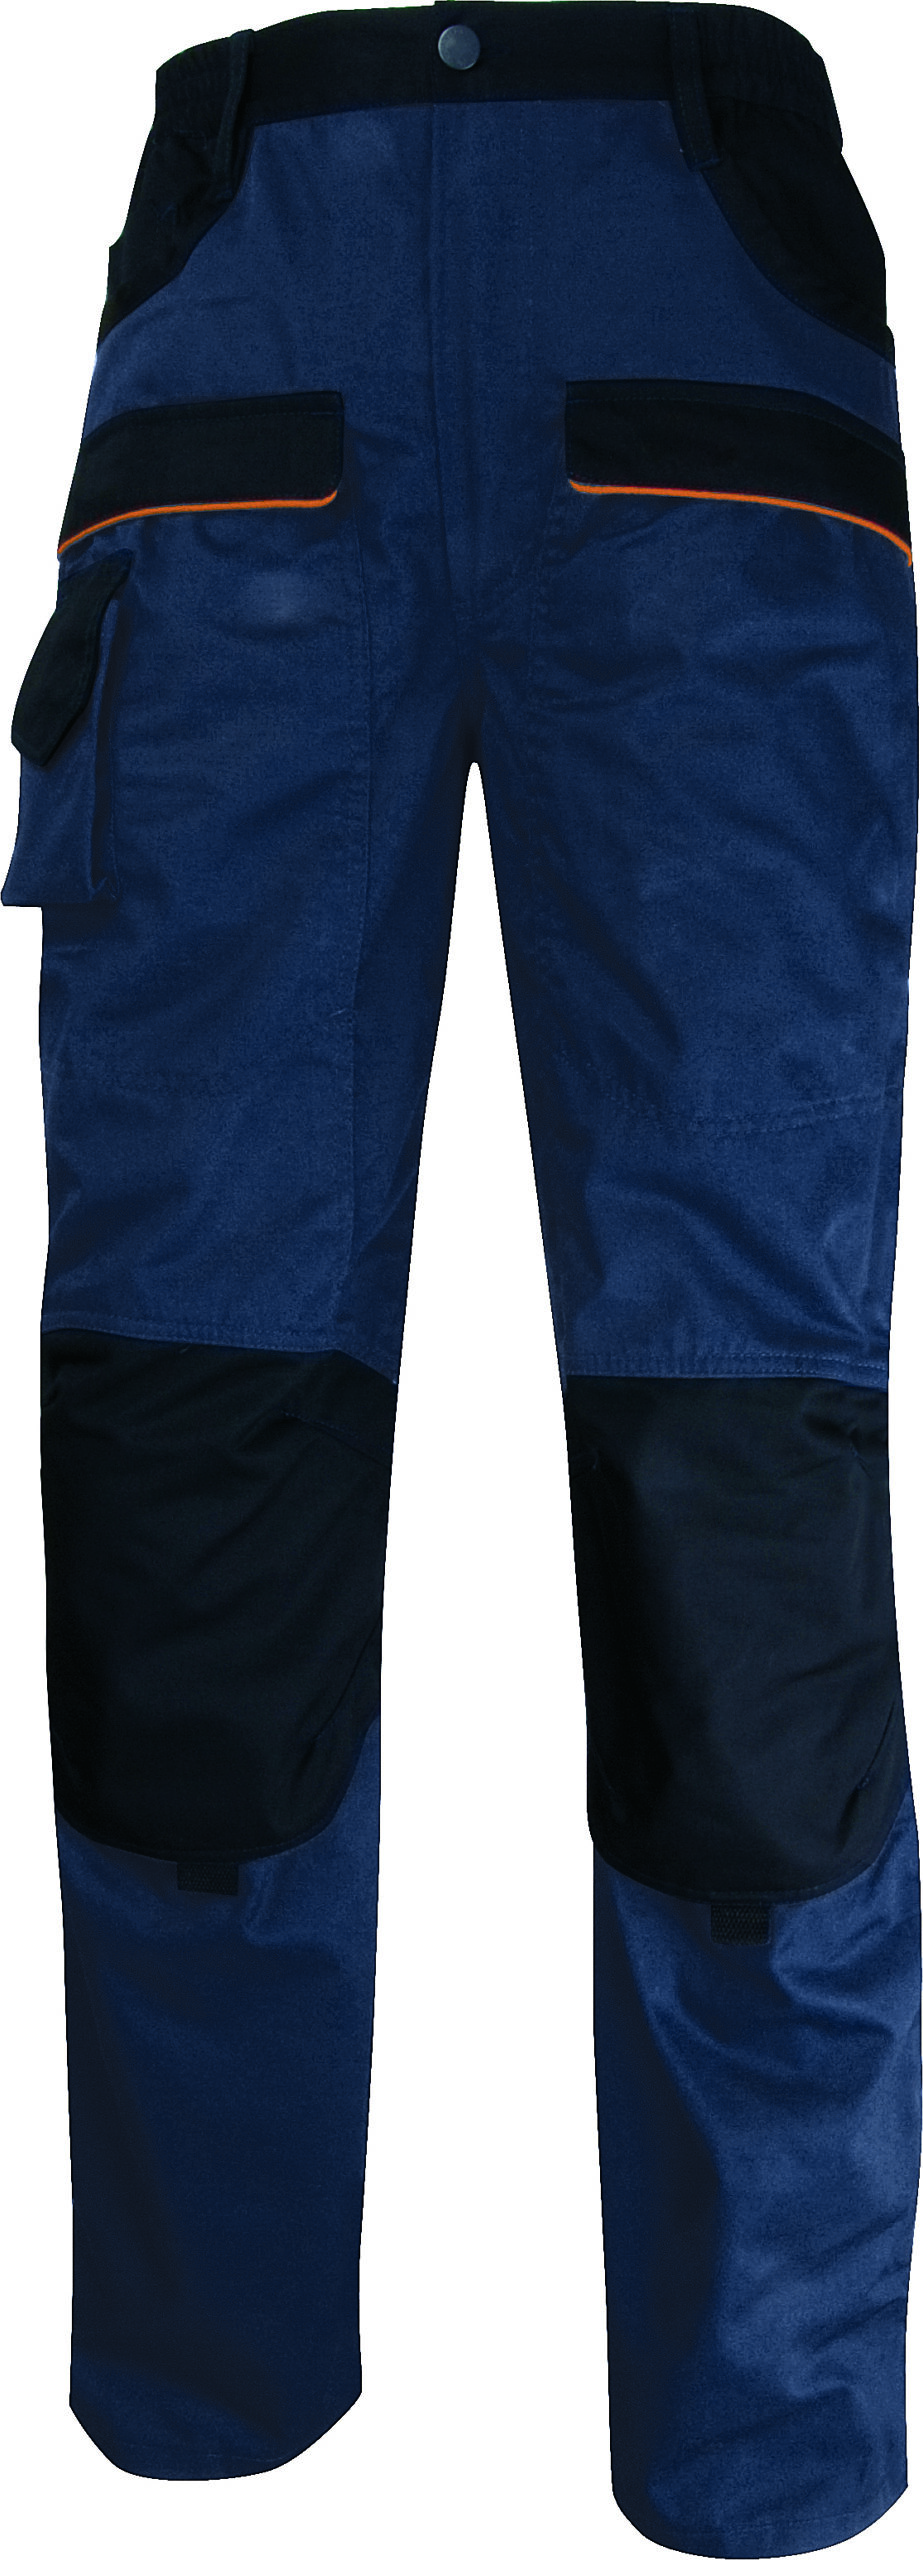 Pantalone da Lavoro Mach 2 Blu Nero Tg L Mcpa2mngt 3295249230807